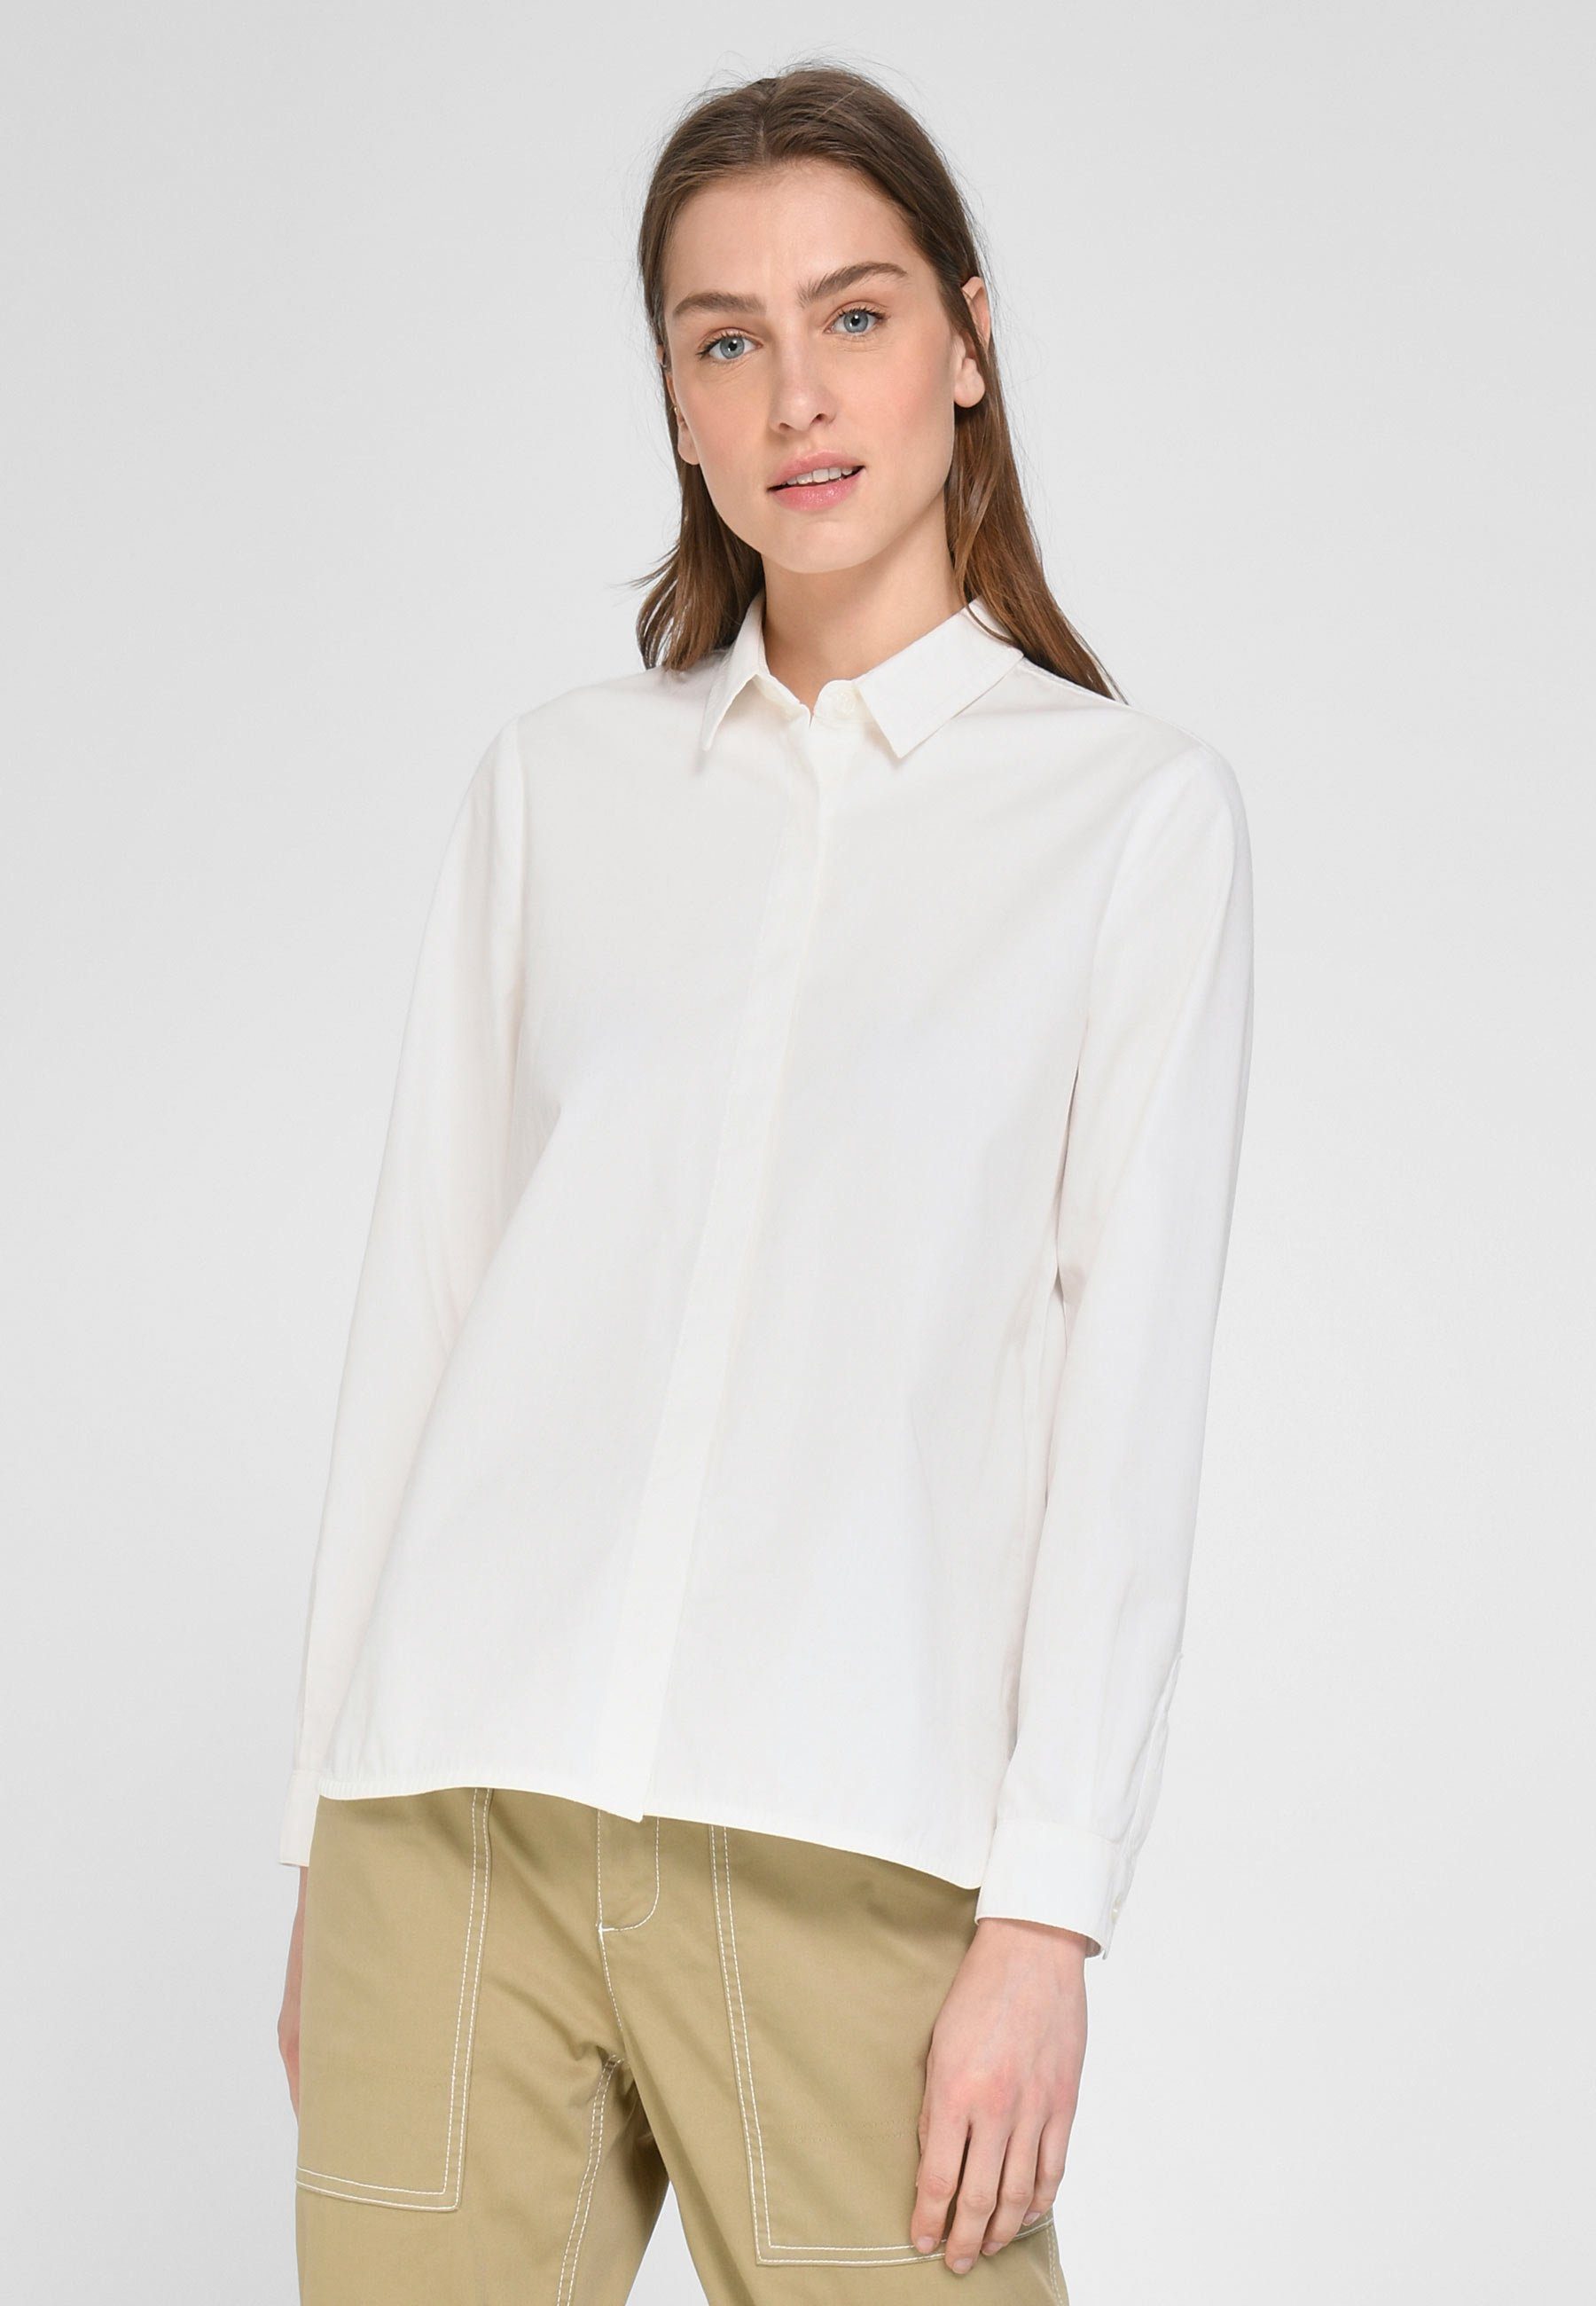 DAY.LIKE Hemdbluse Cotton mit klassischem Design | Hemdblusen